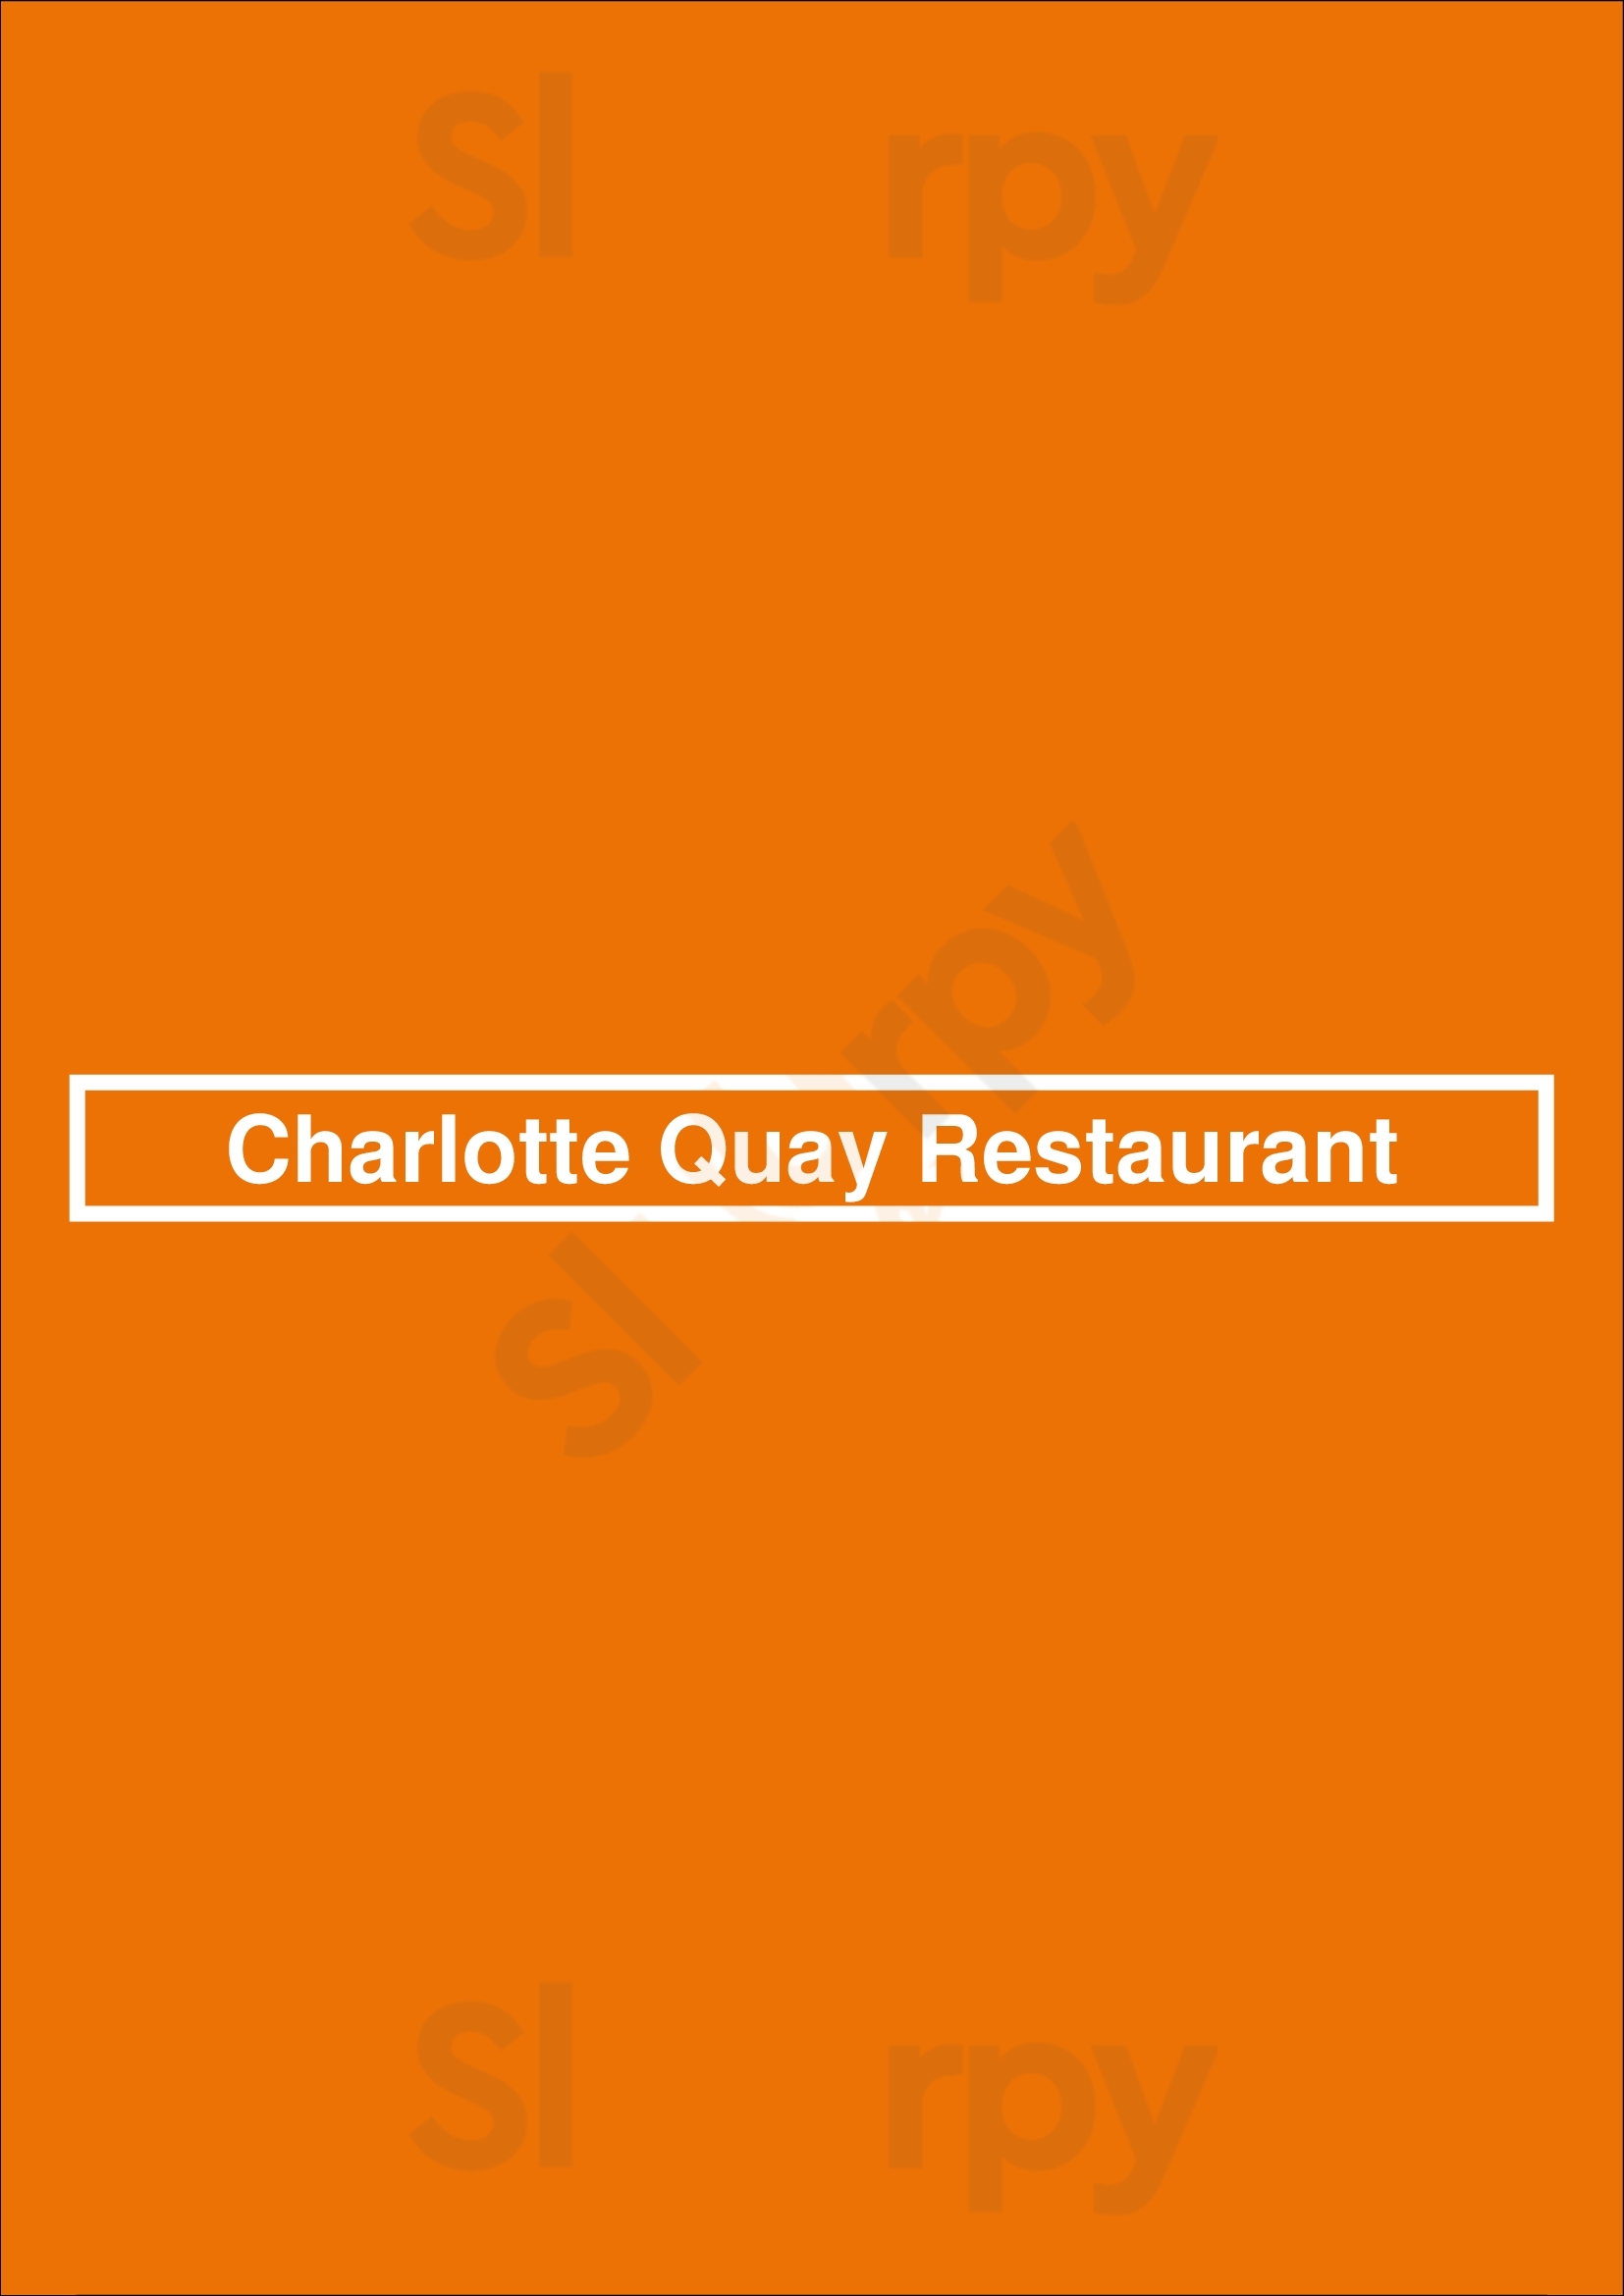 Charlotte Quay Restaurant Dublin Menu - 1